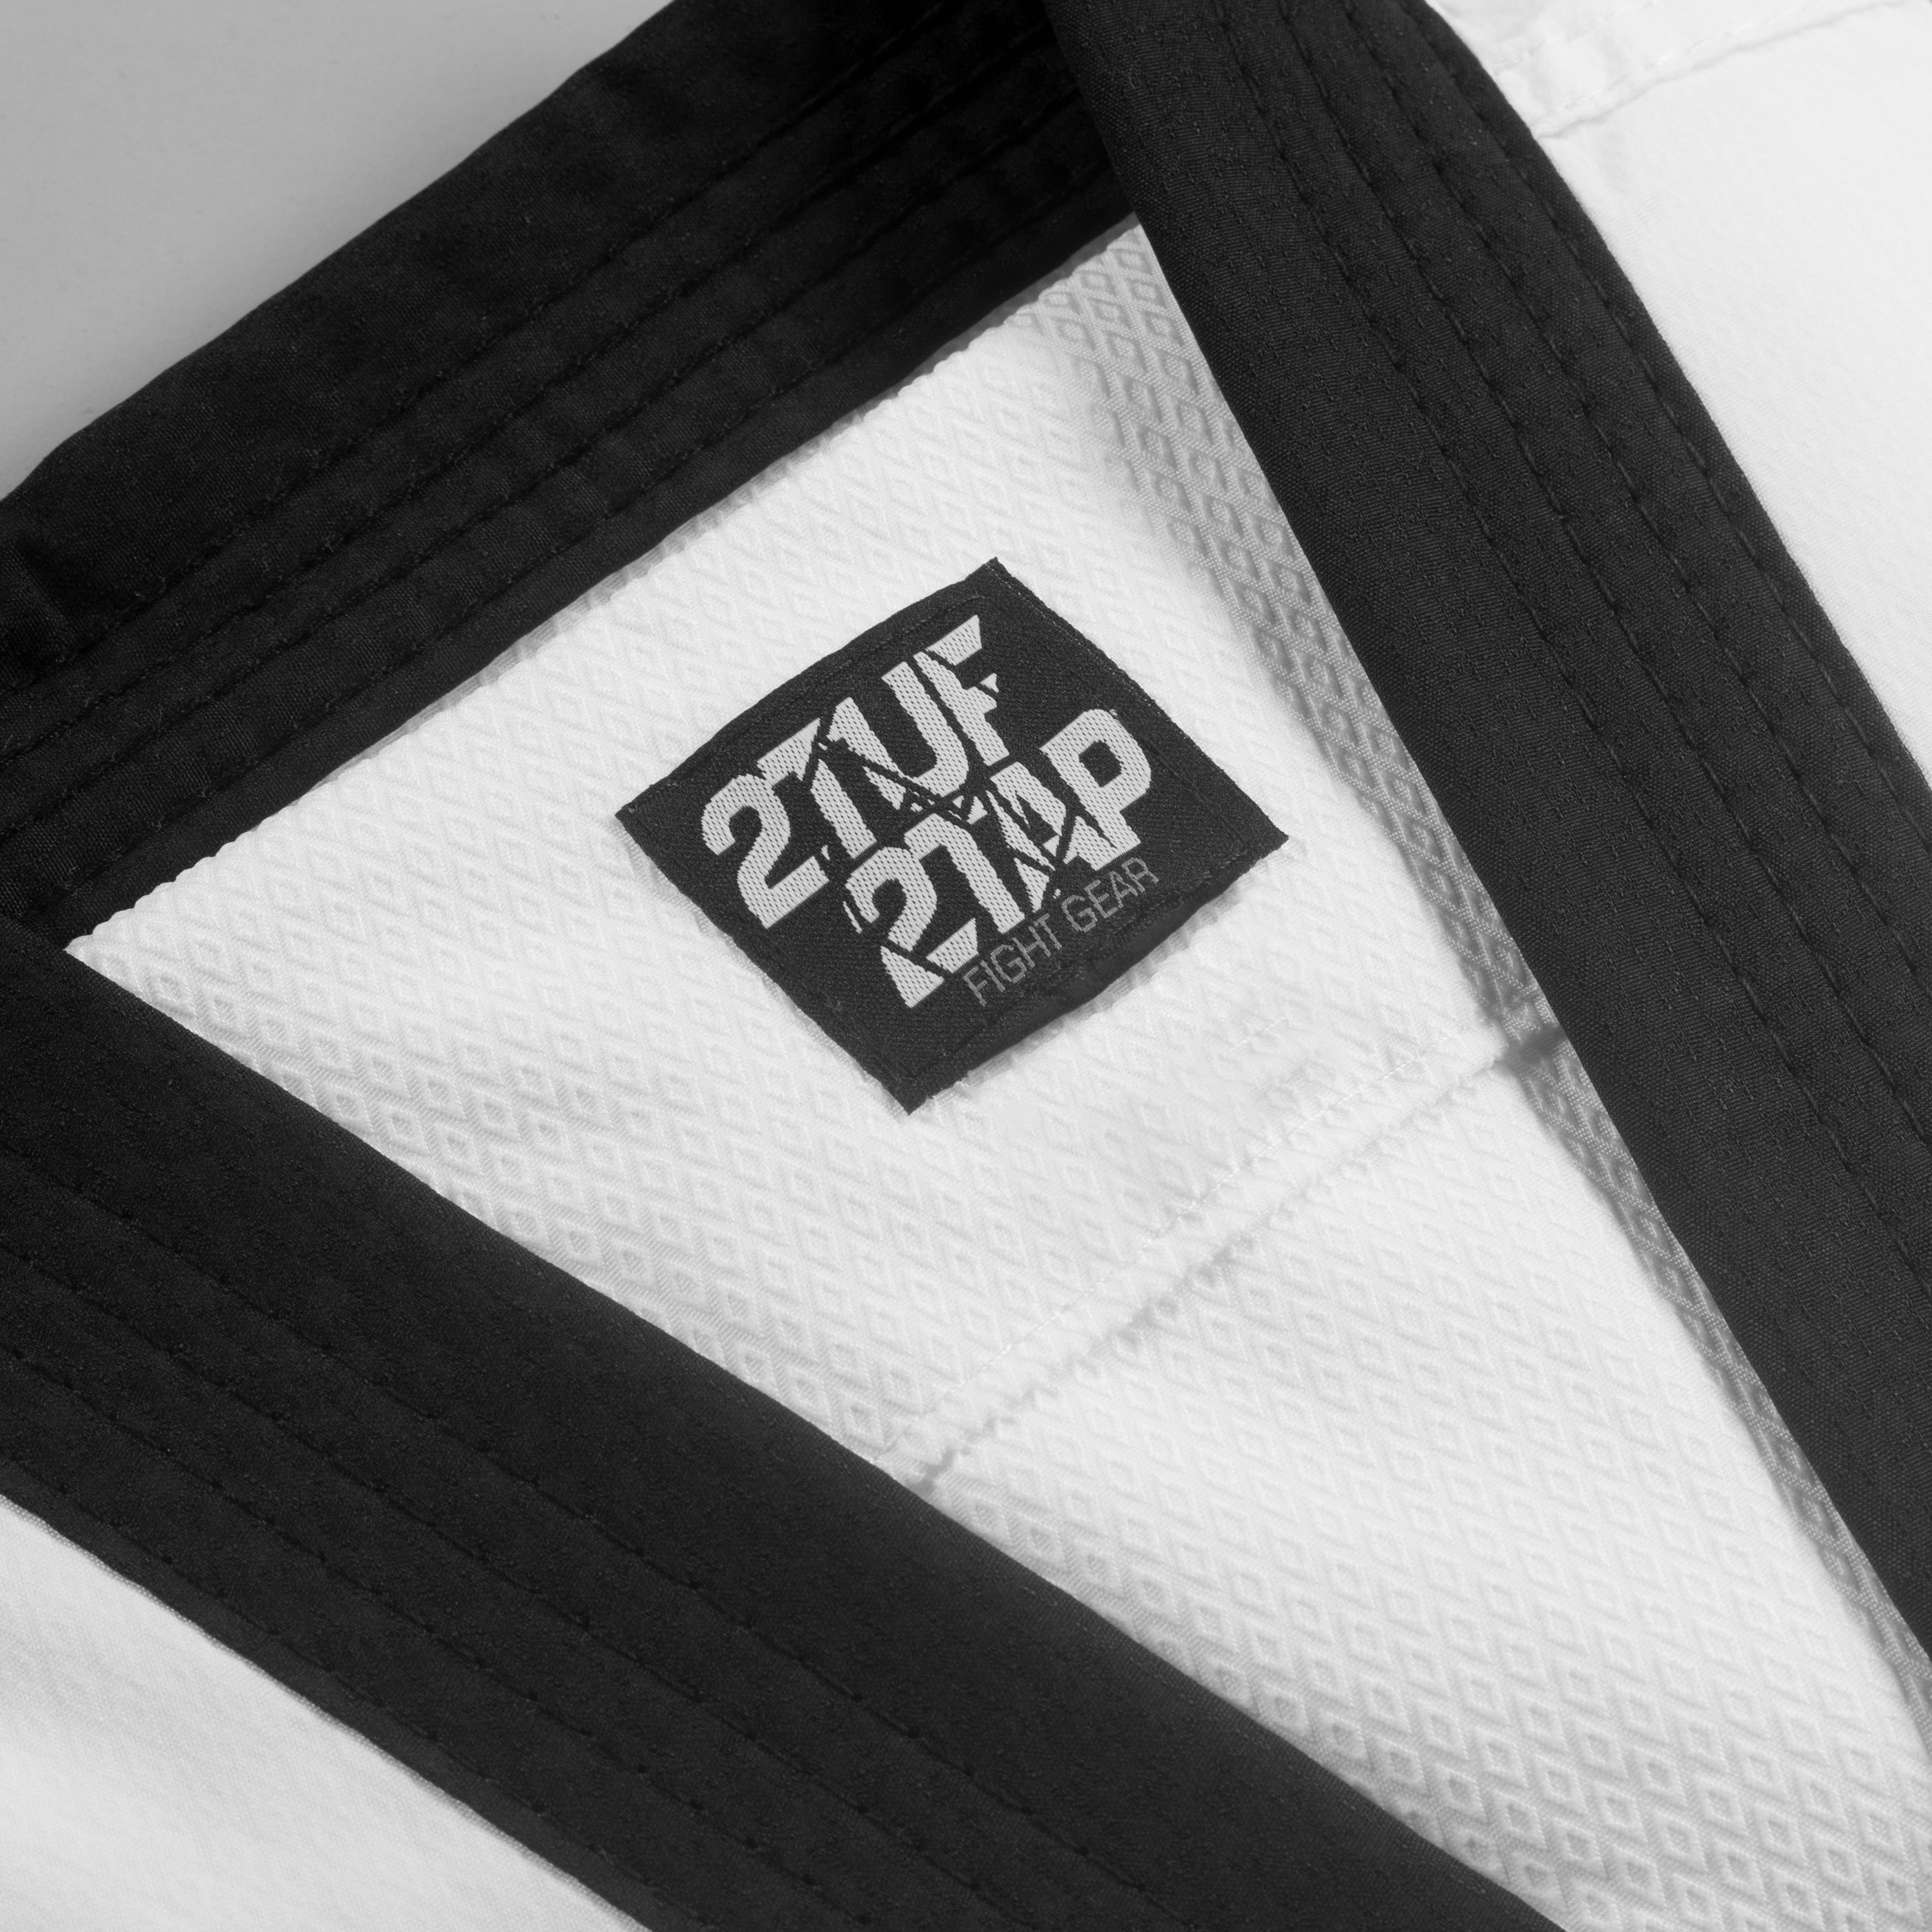 'Fighter JO' Taekwondo Dobok Uniform - White/Black 2TUF2TAP